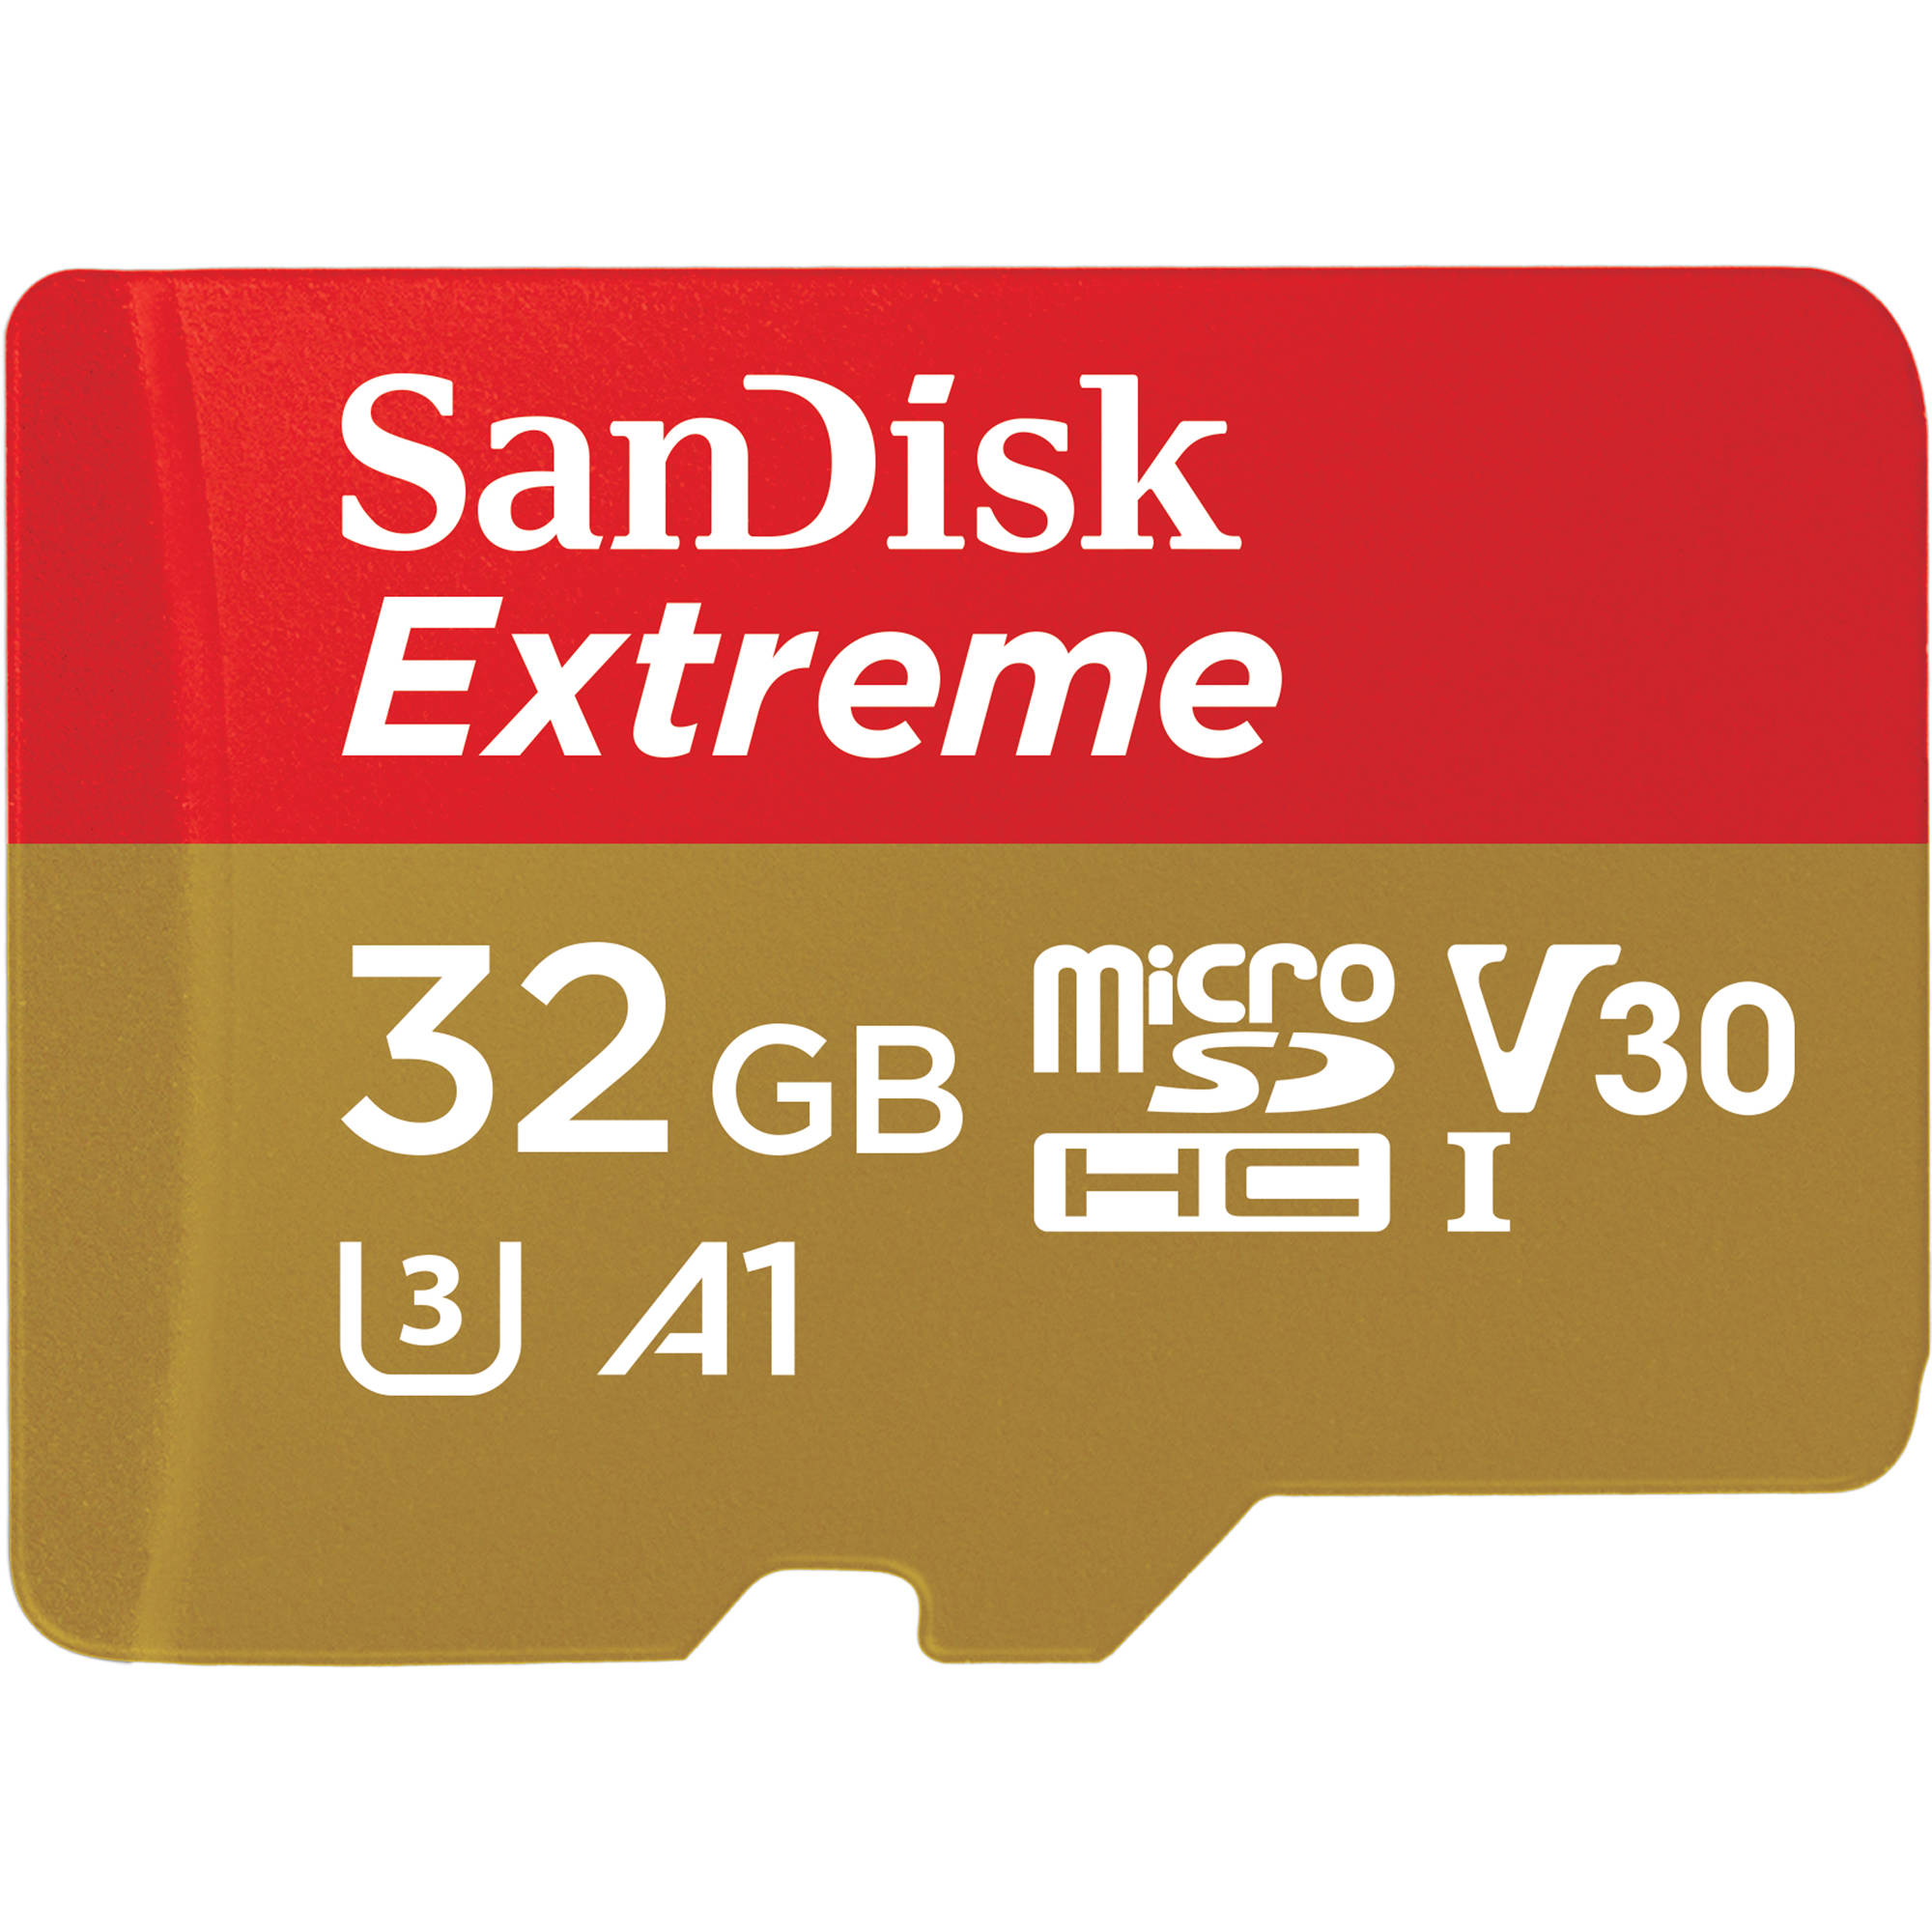 SanDisk 32 GB: Extreme MicroSD UHS-1 Card 